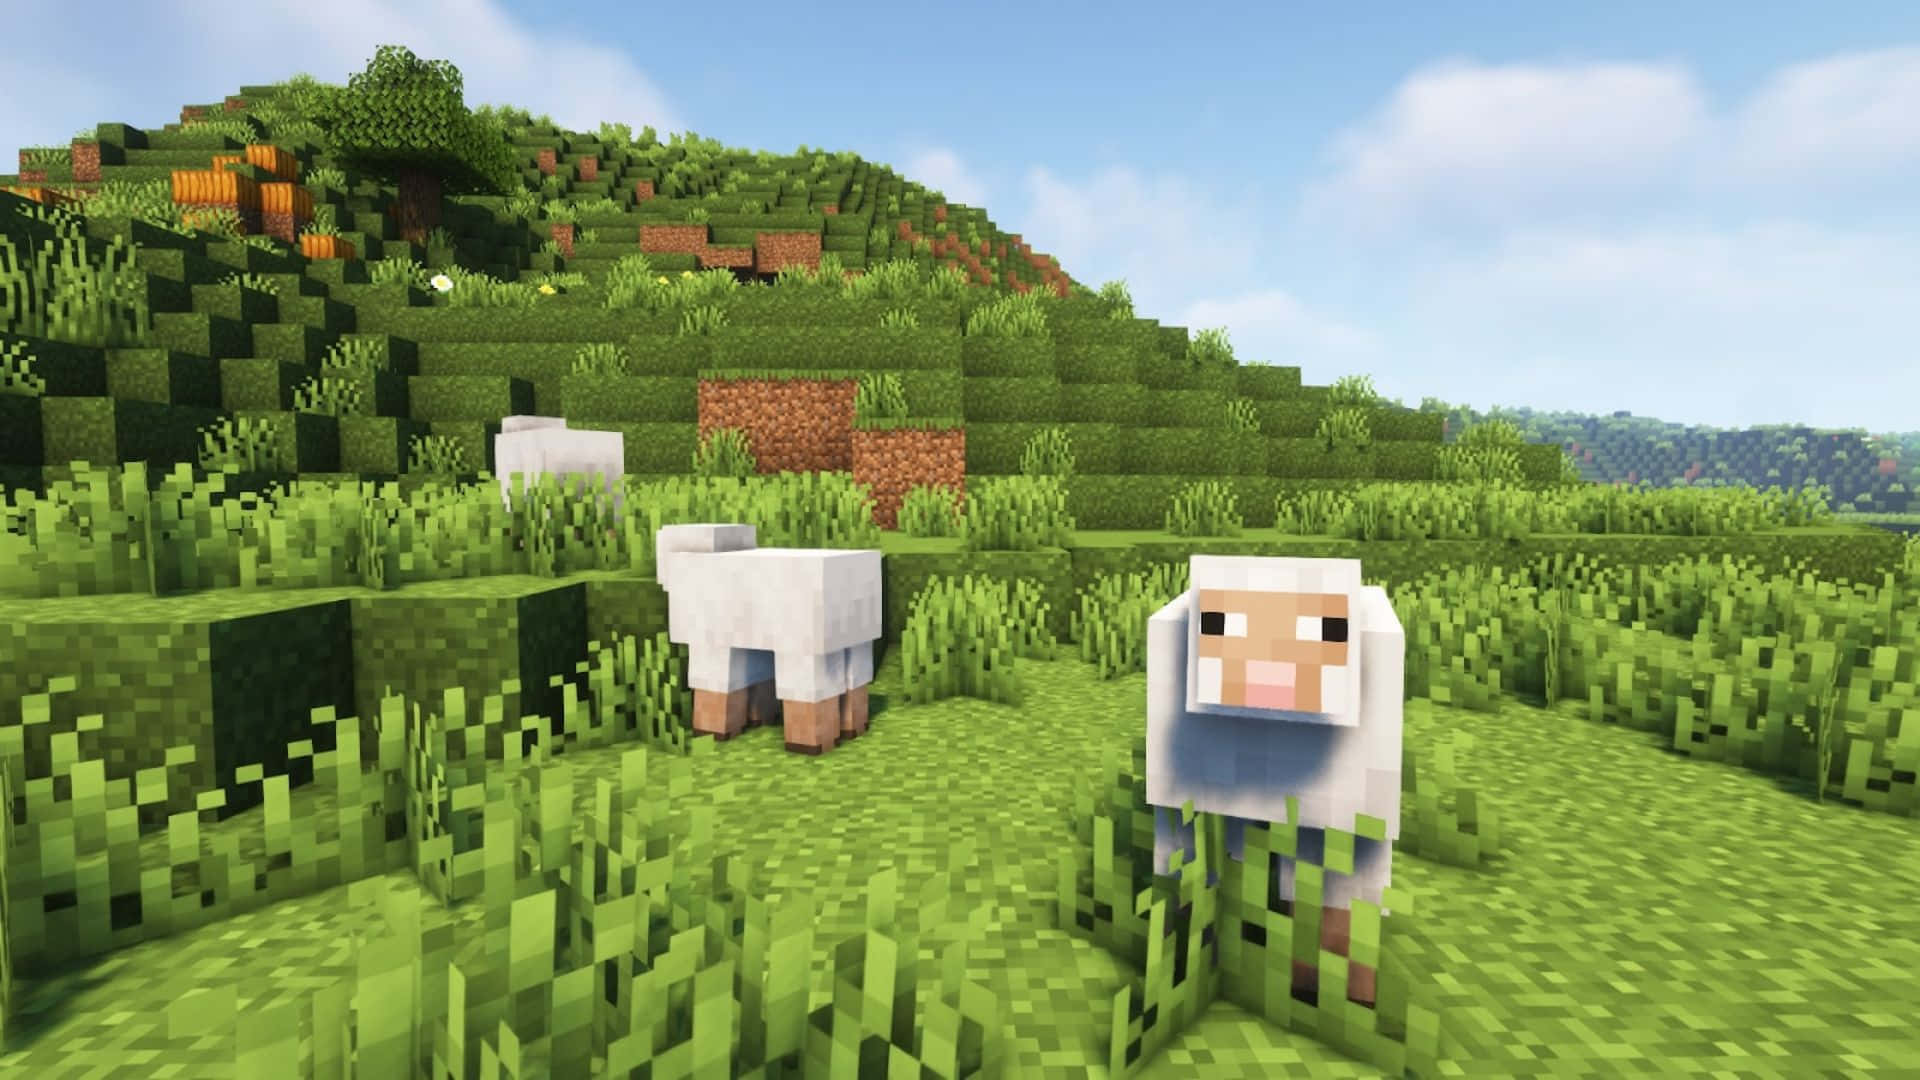 Minecraft Sheep Grazing in a Grassy Field Wallpaper